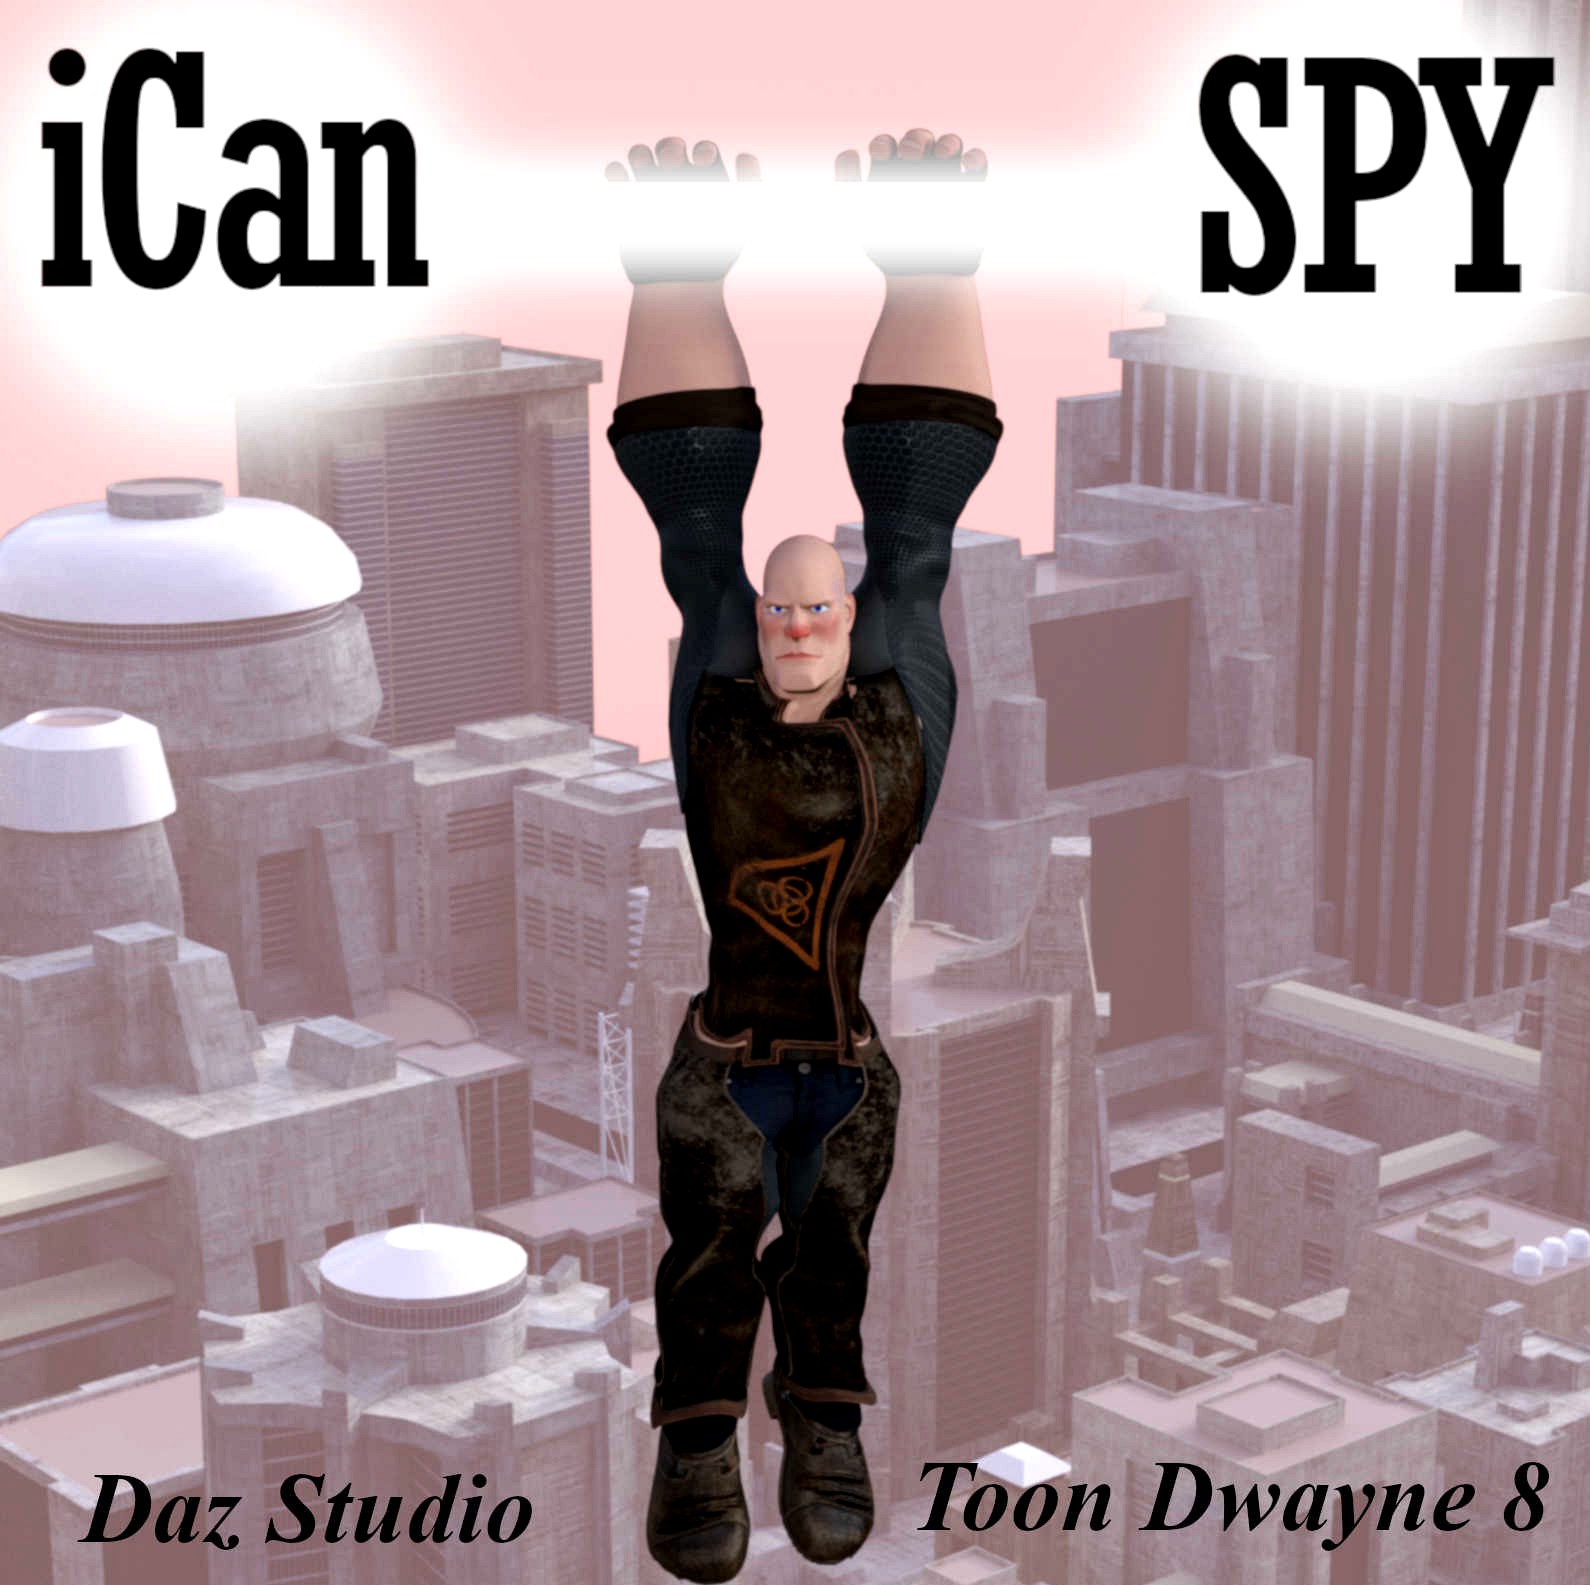 iCan SPY Poses for Toon Dwayne 8 in Daz Studio